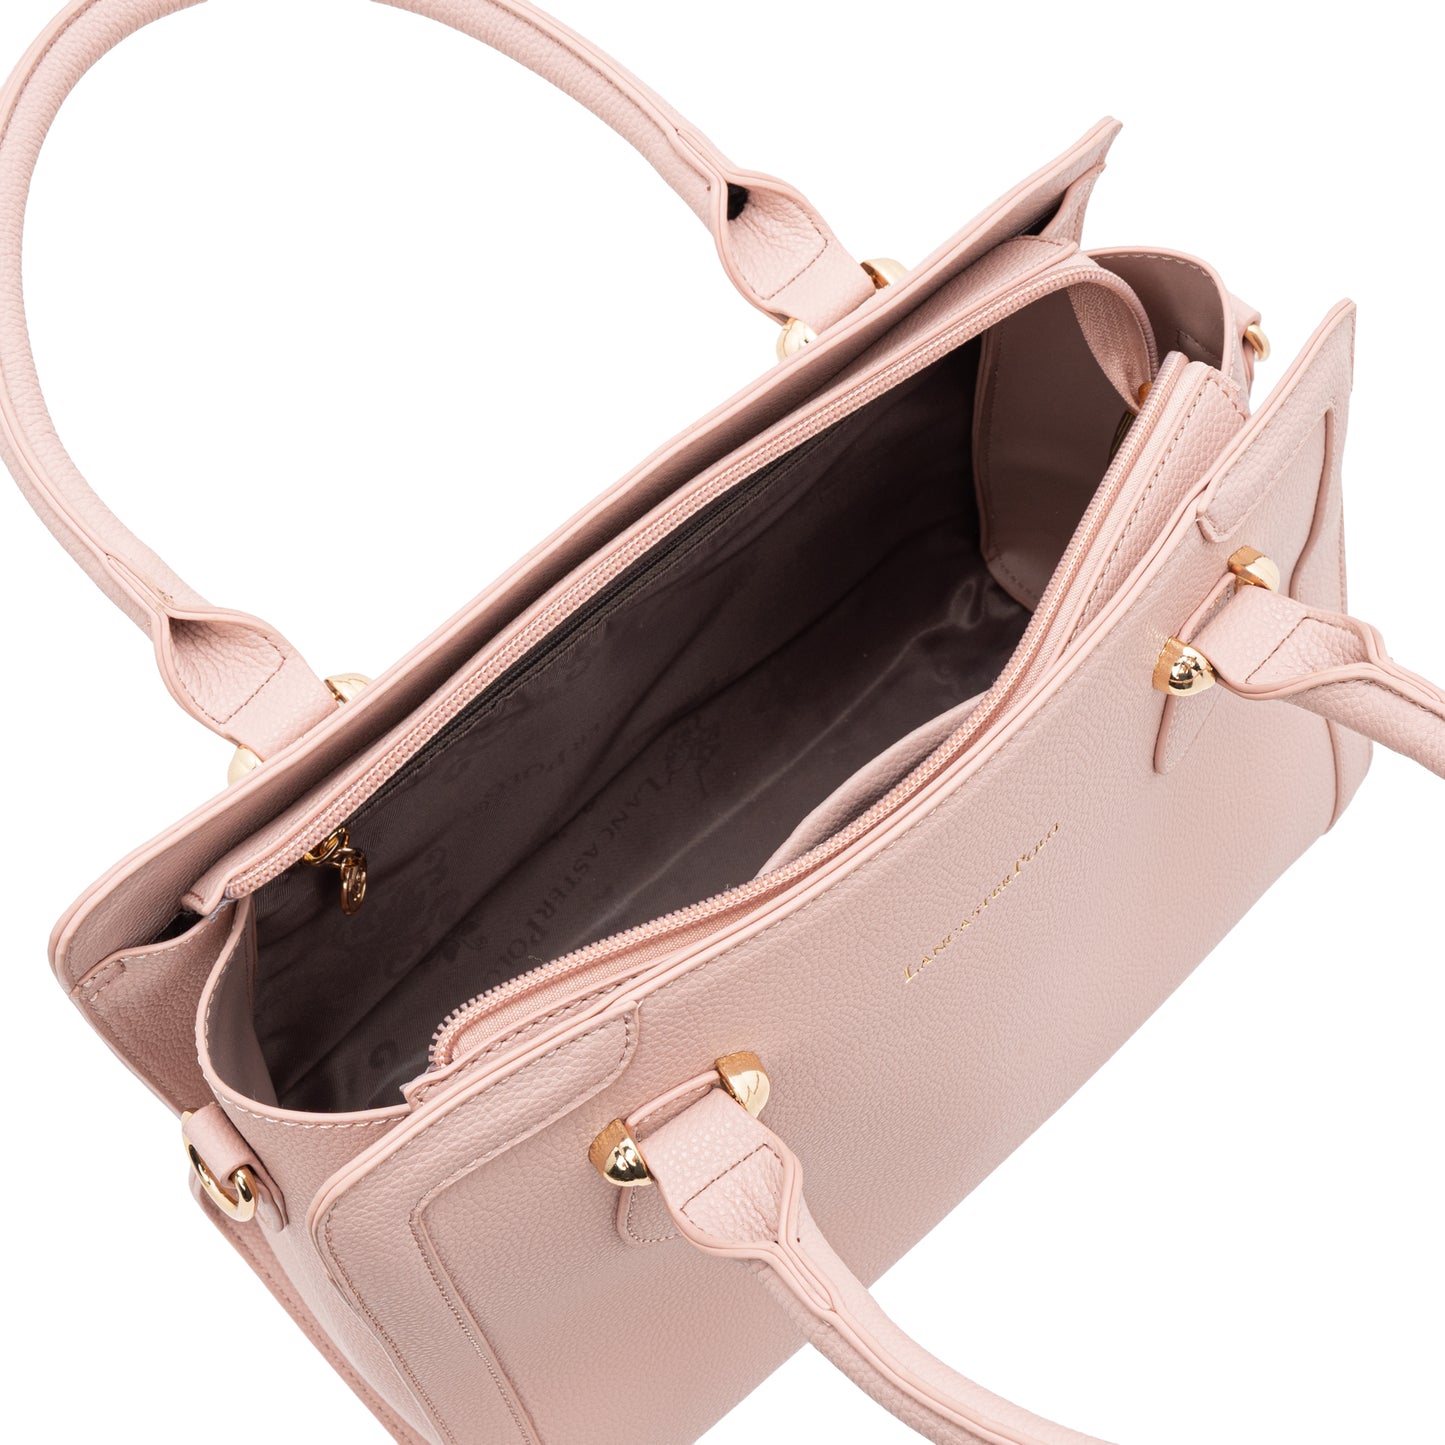 Priscilla 3 in 1 Handbag Sets